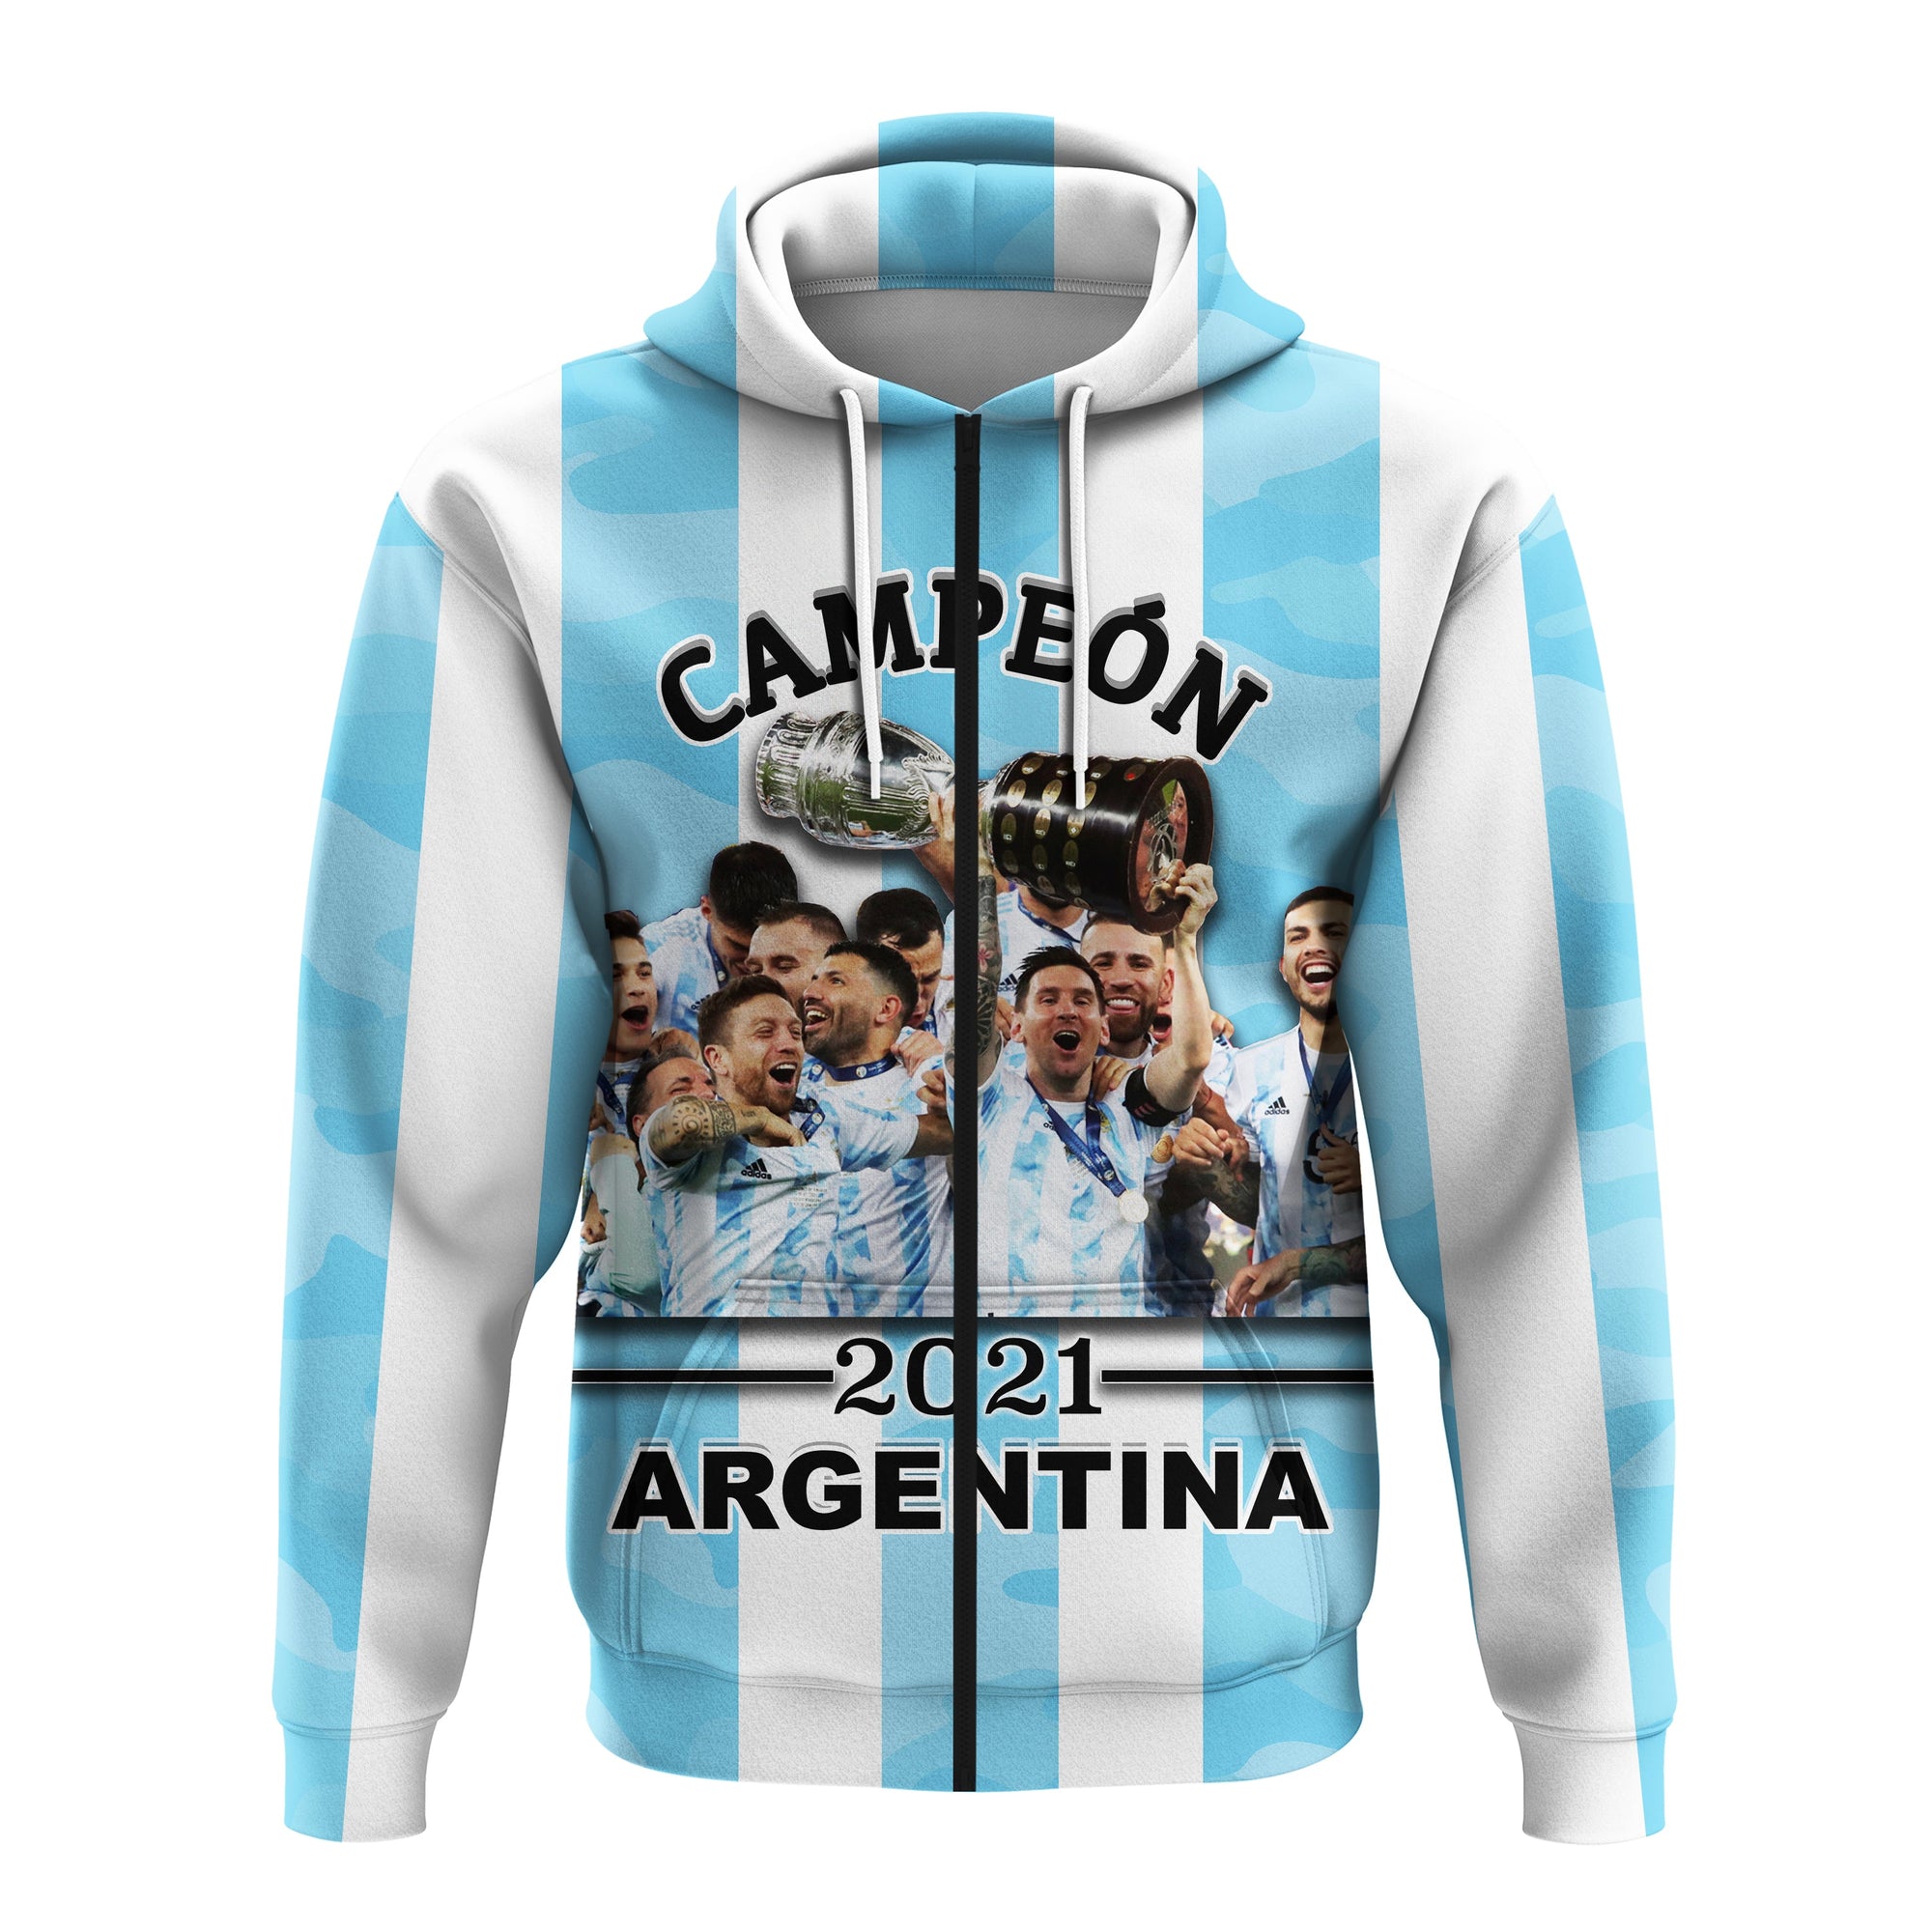 argentina-champion-2021-teammate-zip-up-hoodie